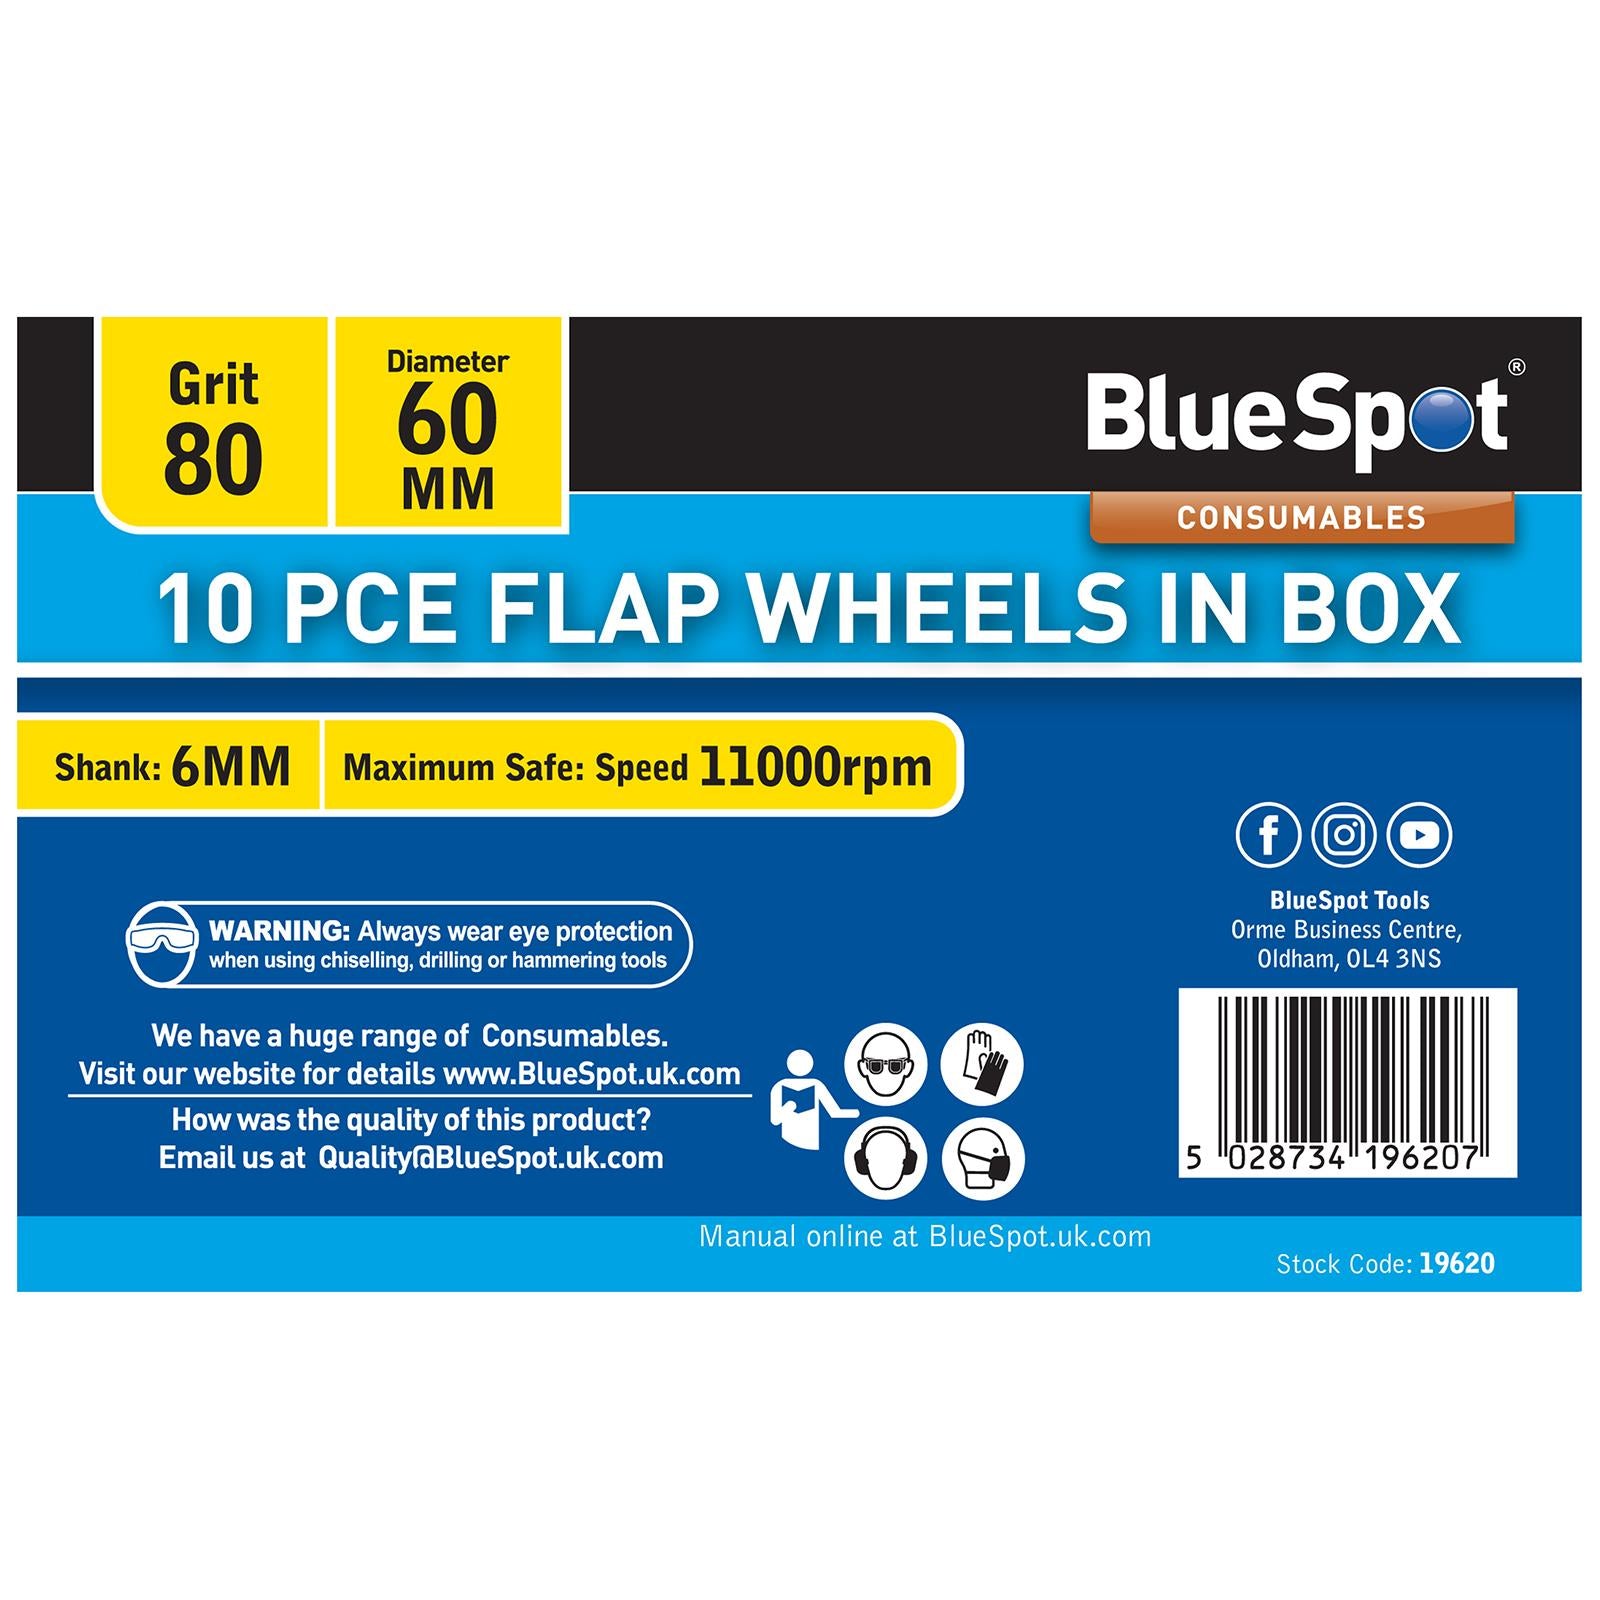 BlueSpot Flap Wheels In Box 10 Pieces 80 Grit 60mm